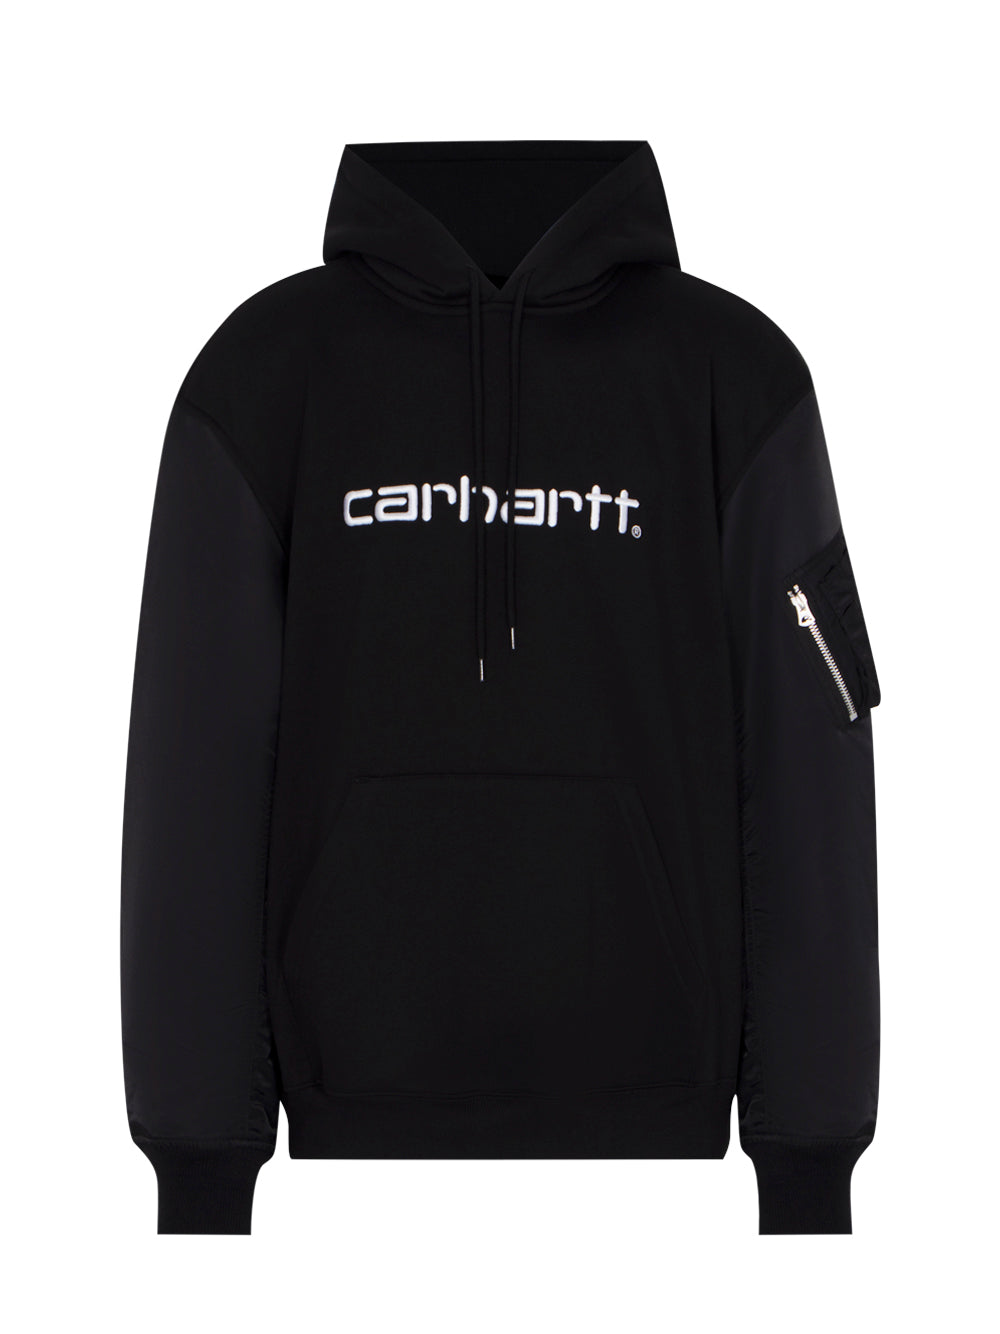 Carhartt Parka Customized X Nylon Twill Black